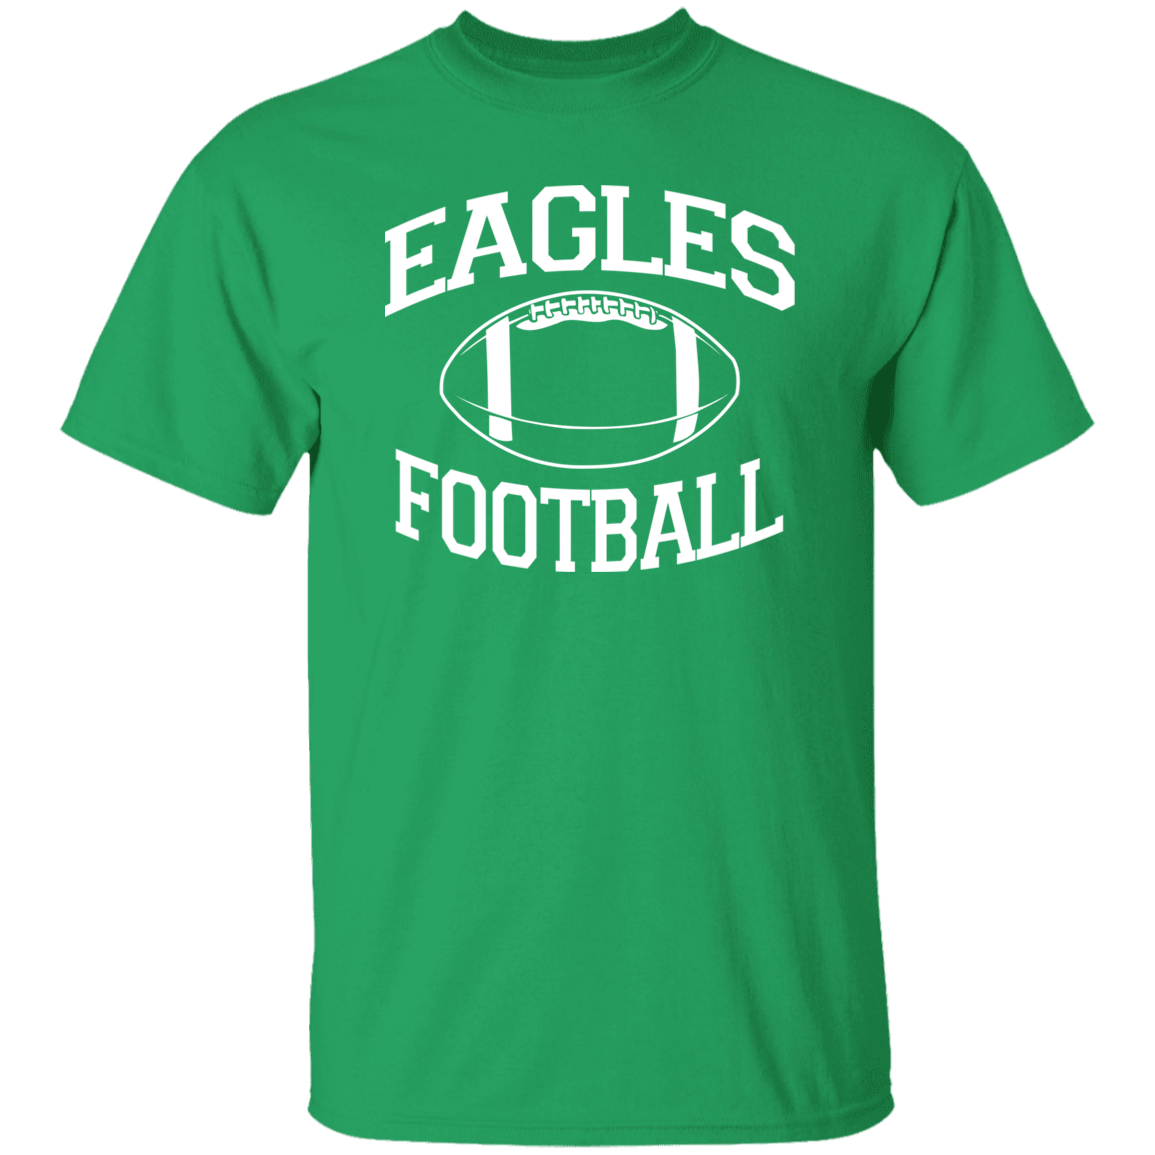 Eagles Football White Print T-Shirt